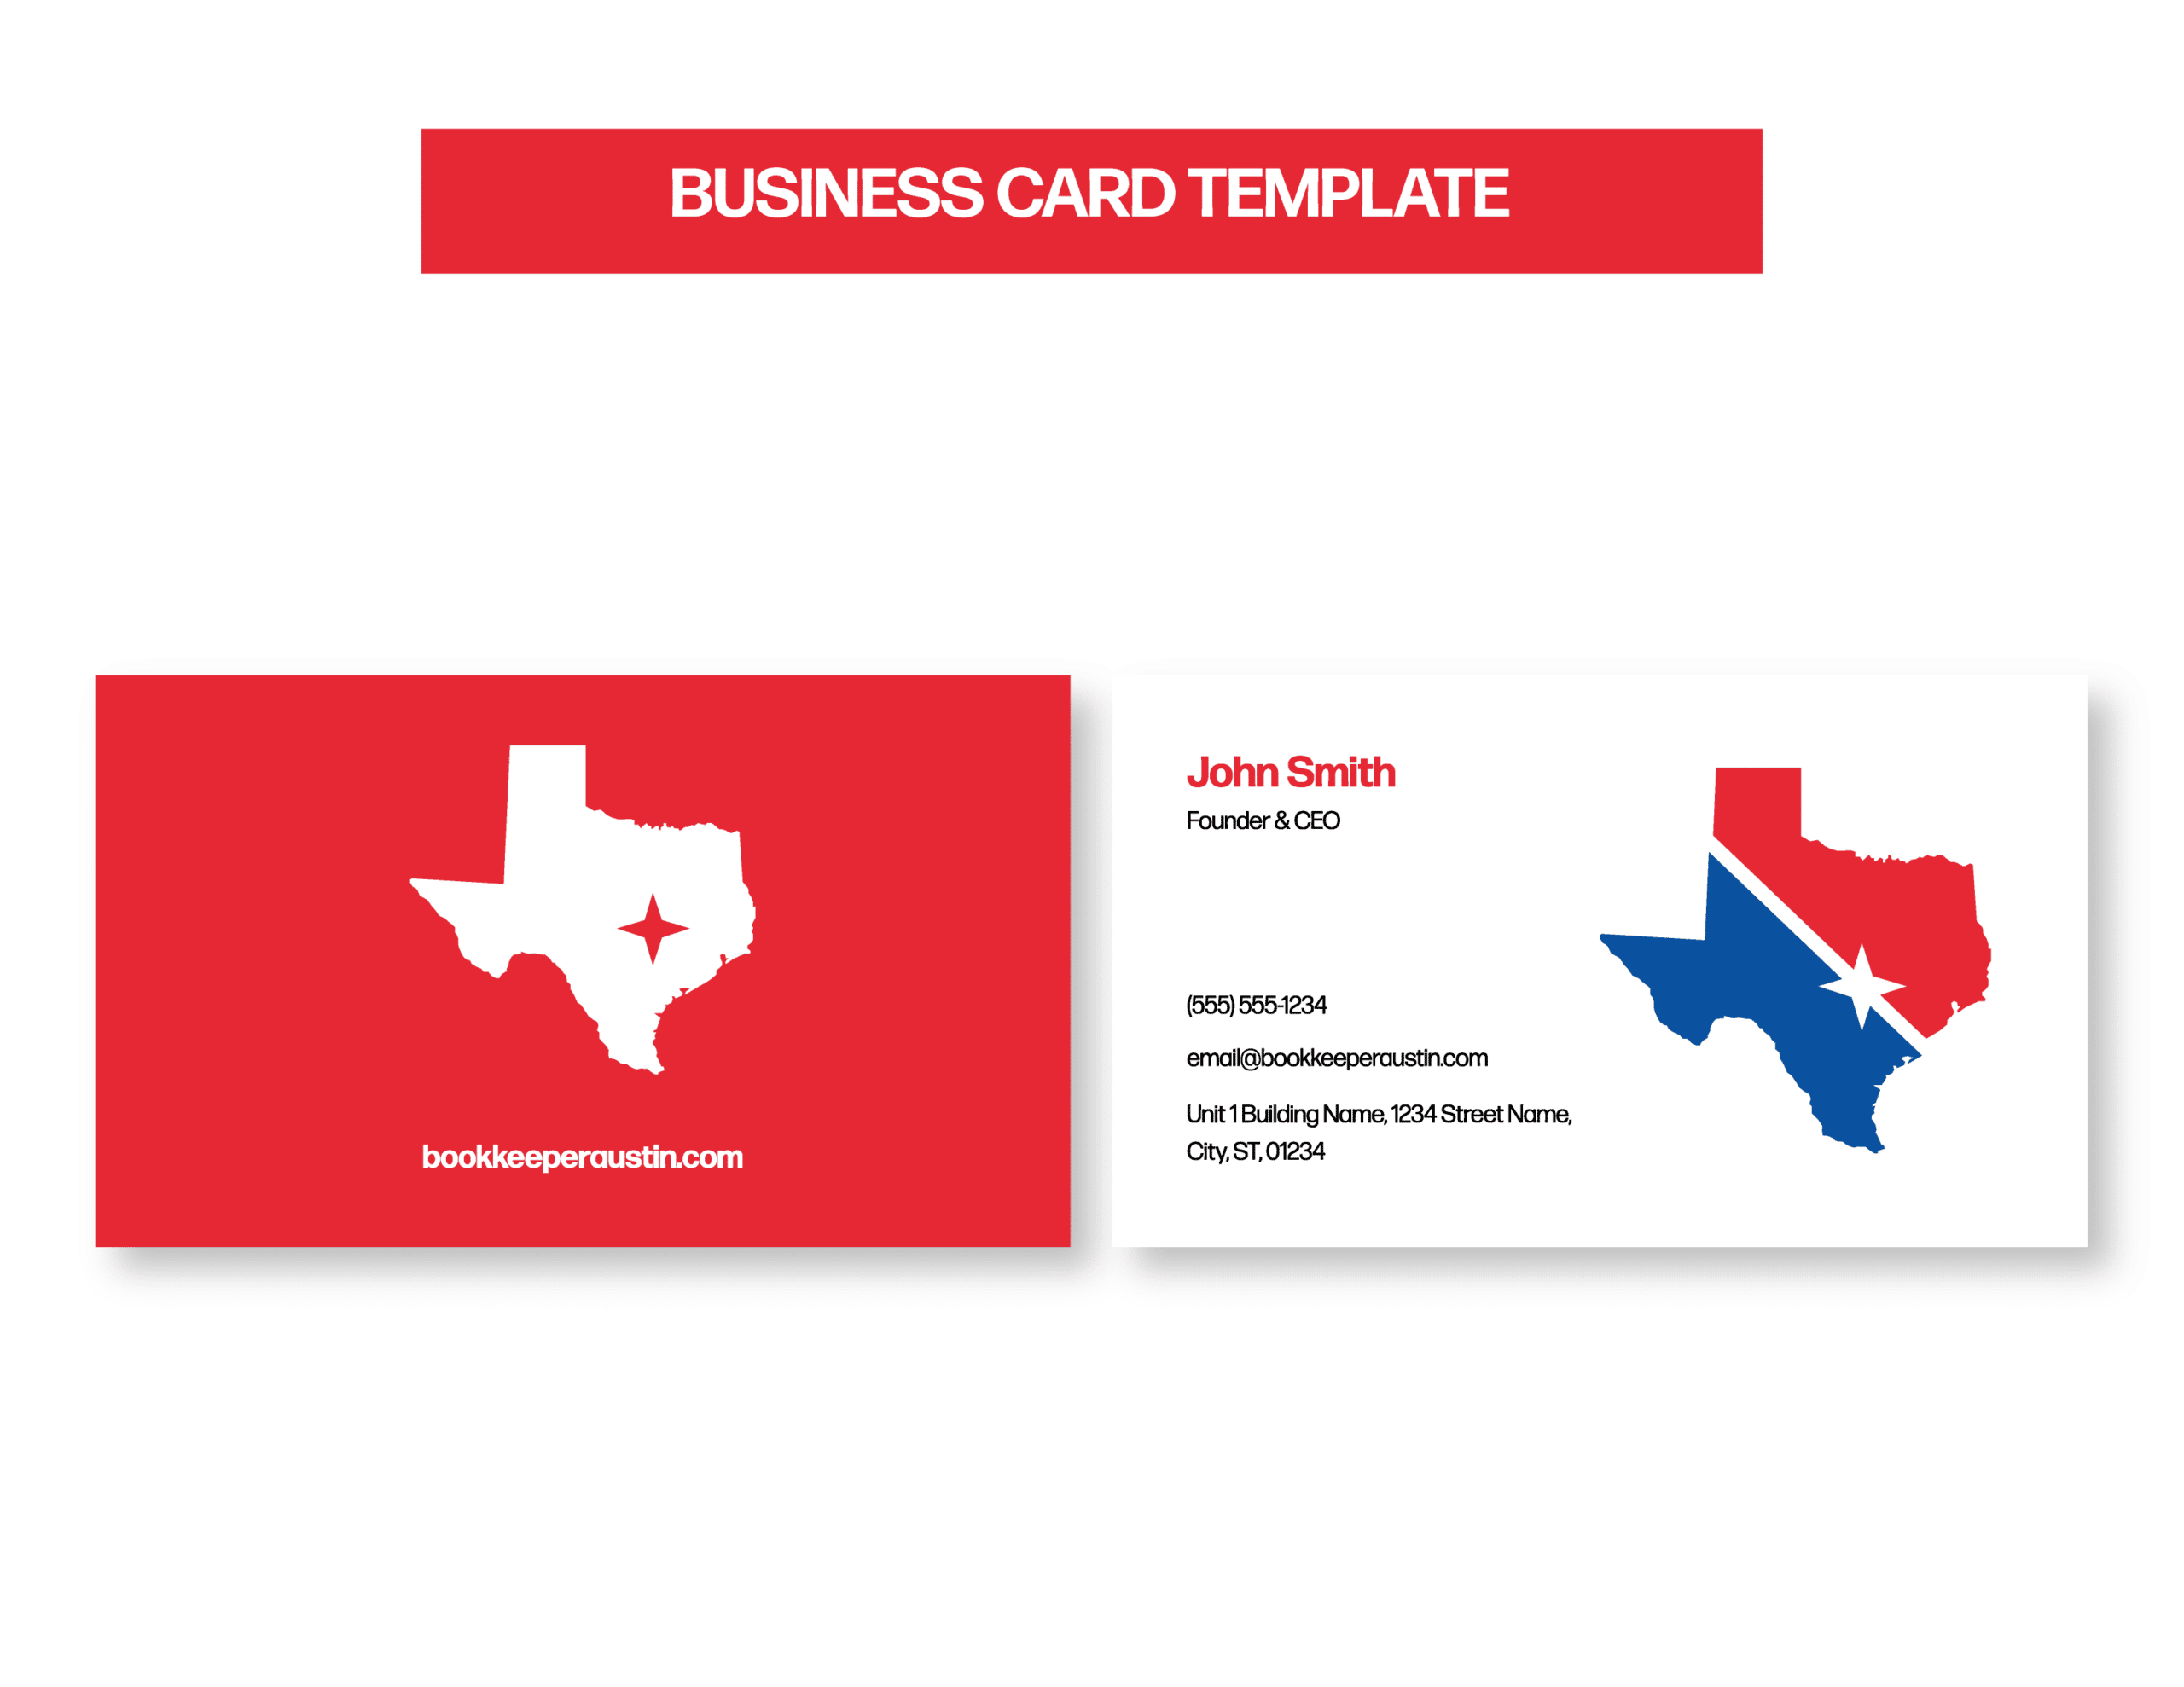 04BKAustin_Showcase_Business Card Template